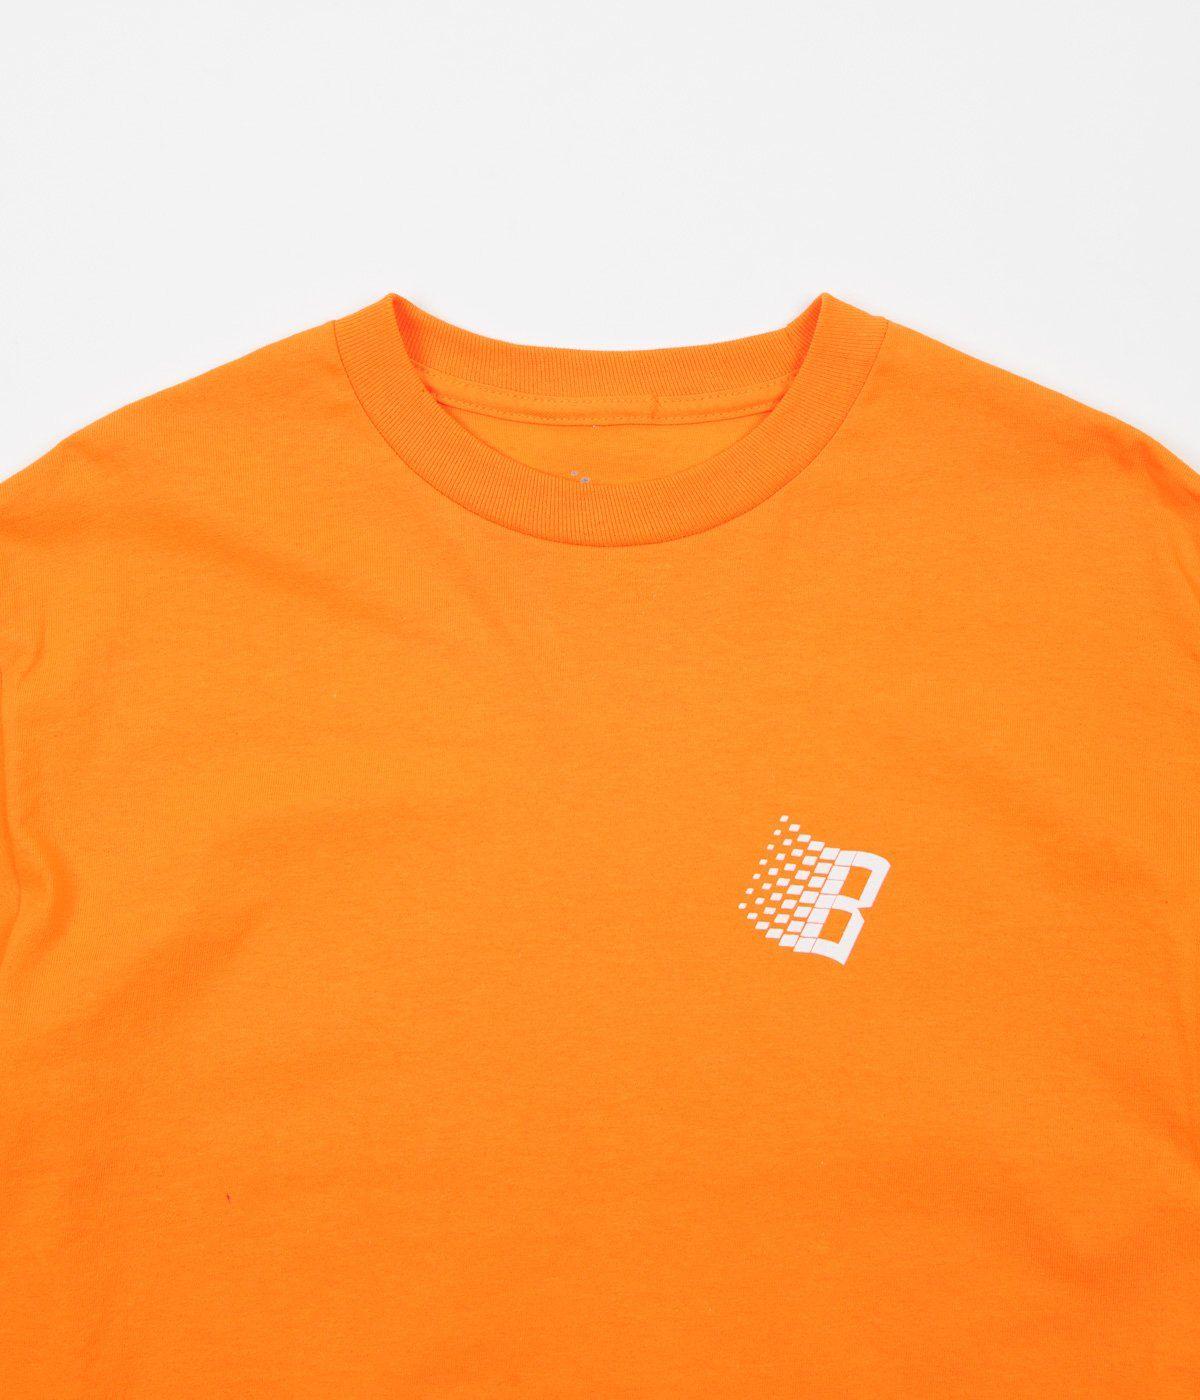 White with Orange B Logo - Bronze 56K B Logo Long Sleeve T-Shirt - Orange / White | Flatspot